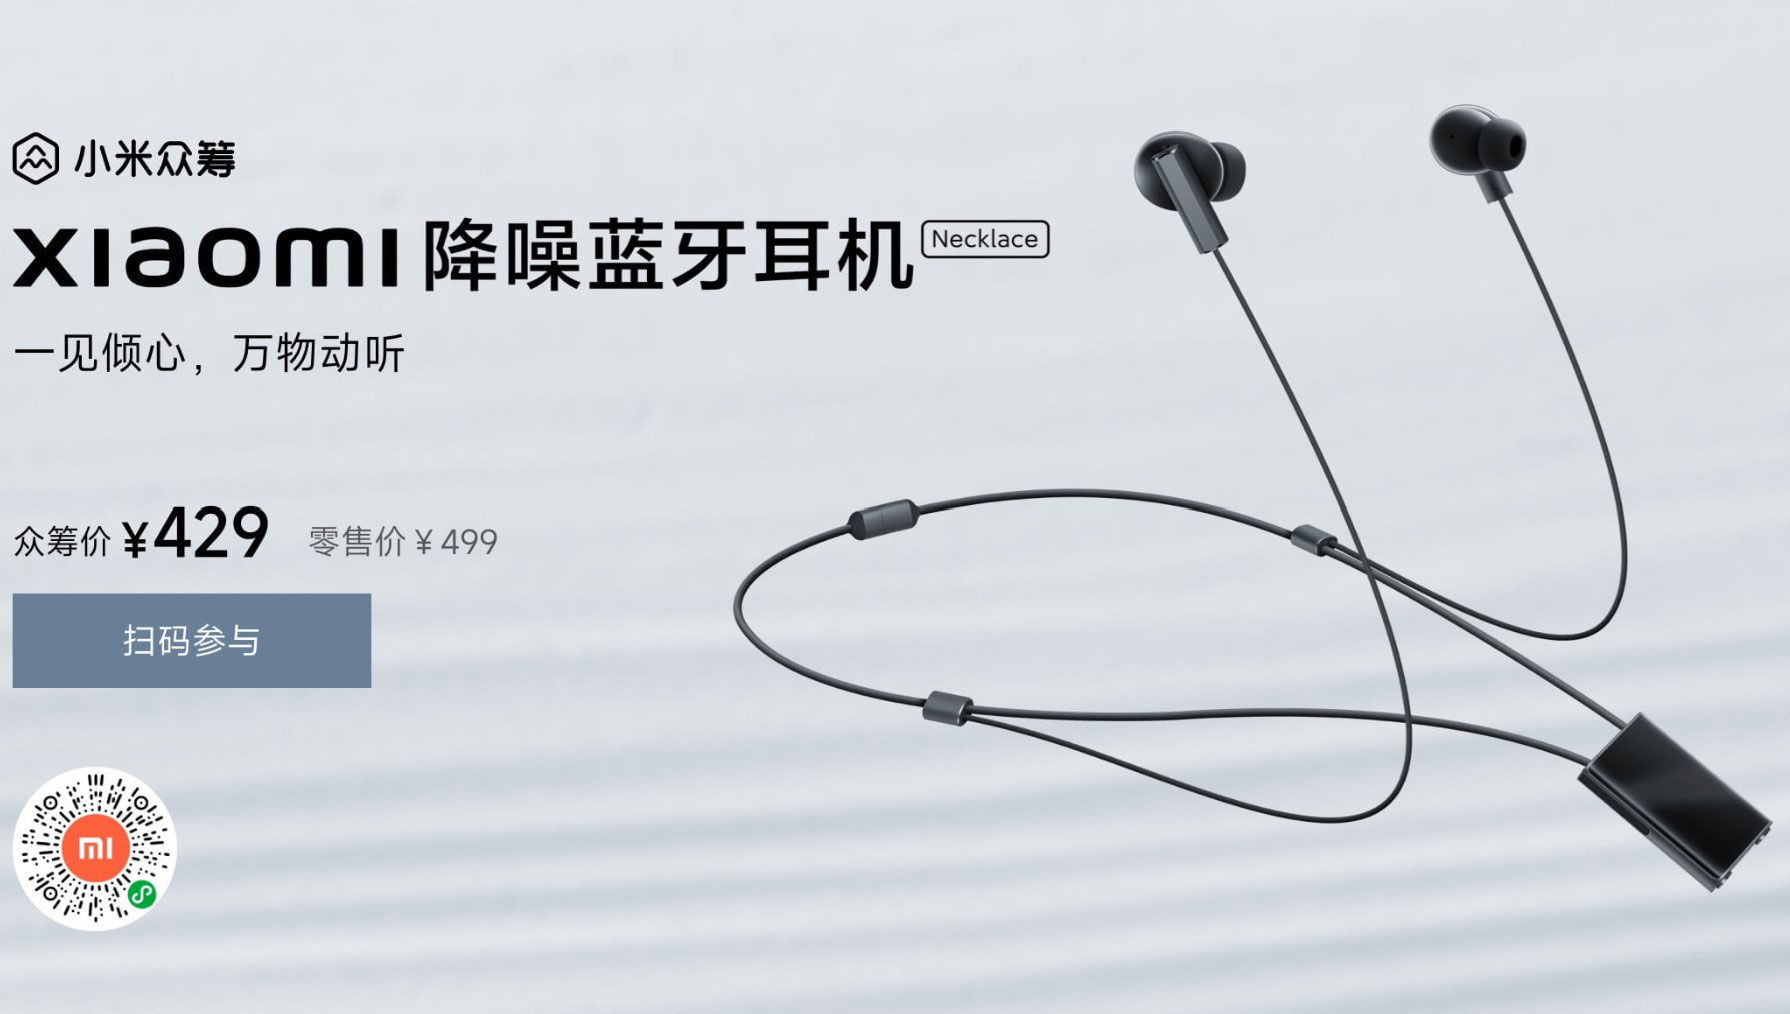 Представлена Bluetooth-гарнитура Xiaomi Noise Cancelling Bluetooth Headset Necklace